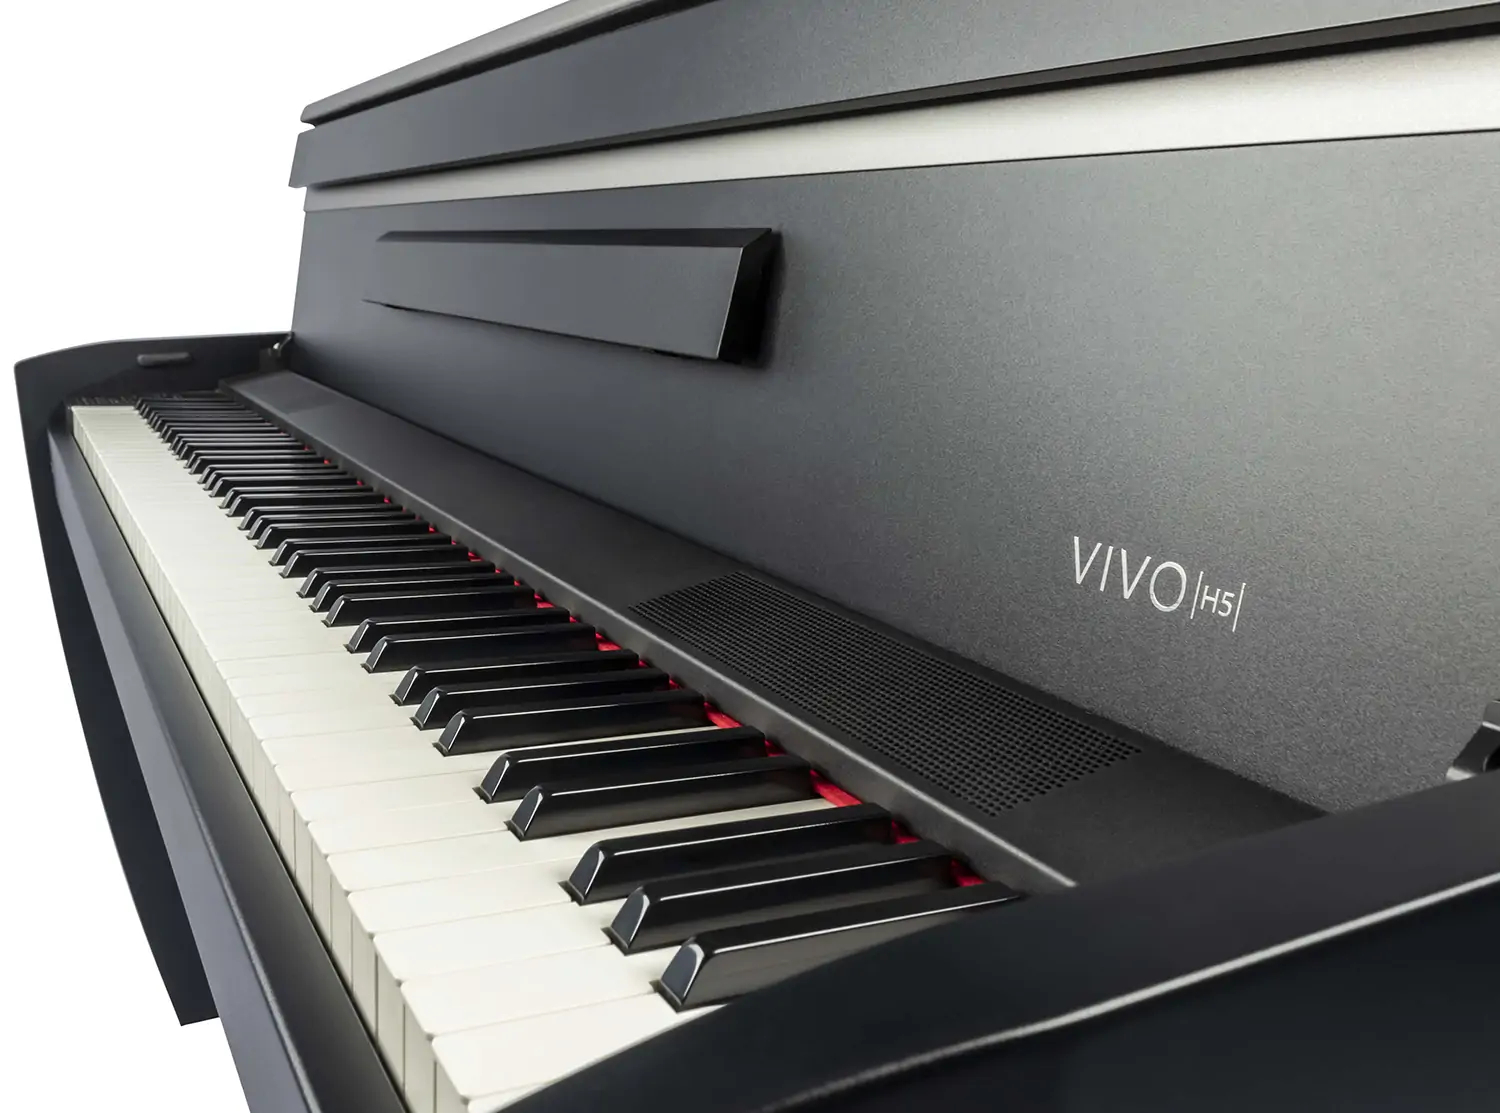 Dexibell Vivo H5 Bk - Digital piano with stand - Variation 3